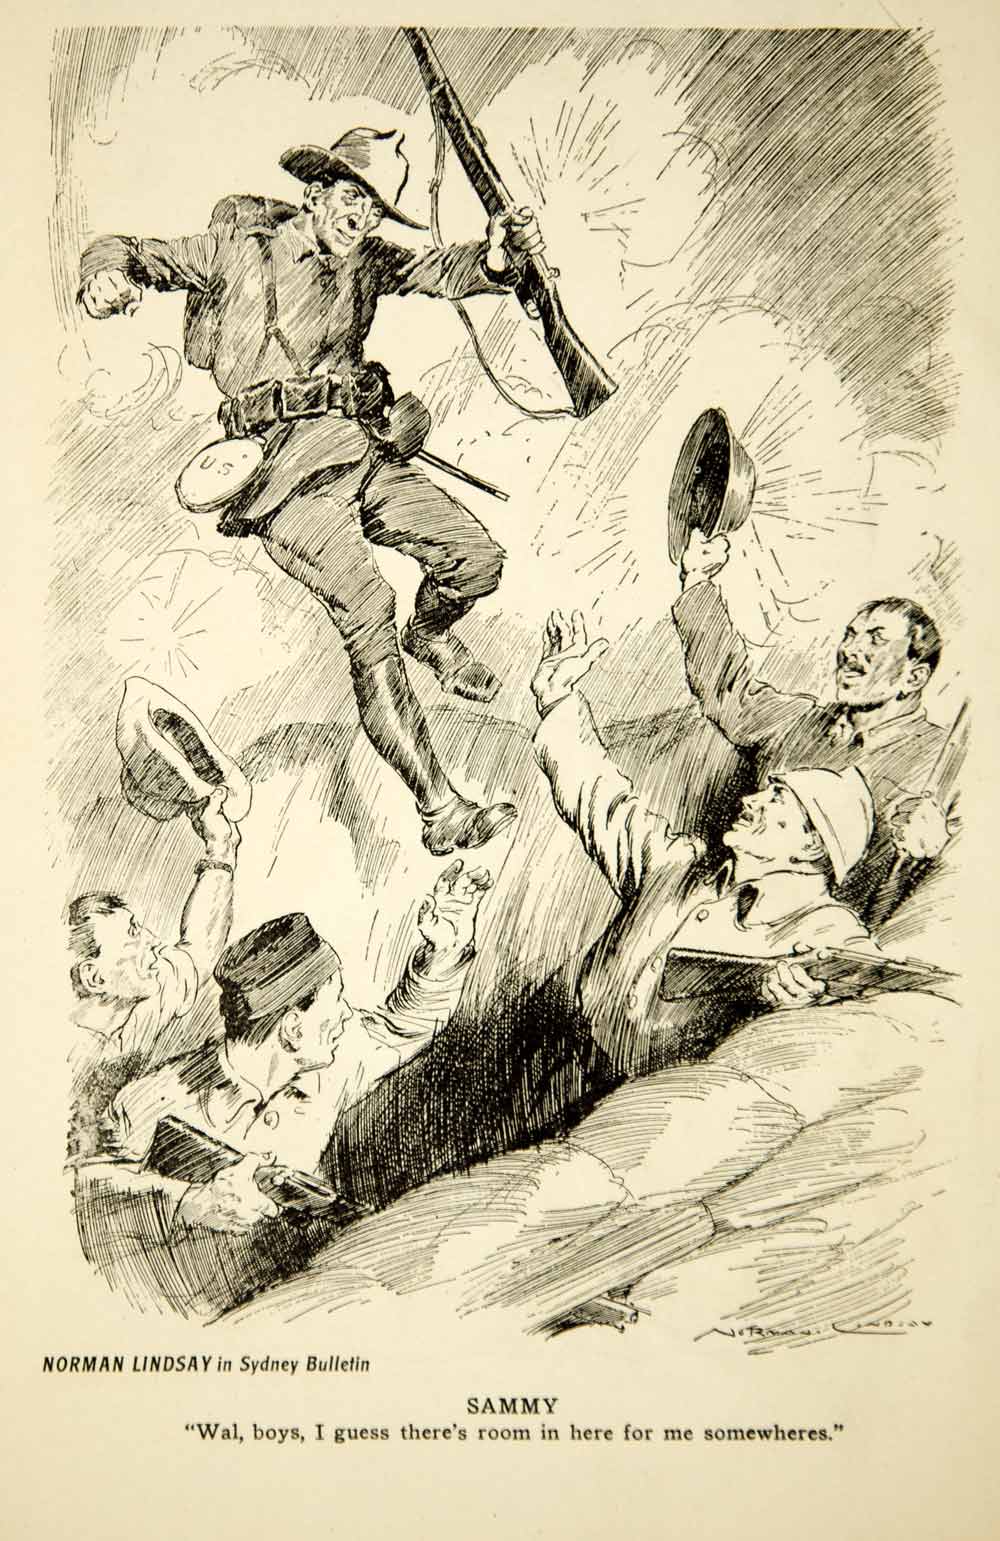 1917 Print World War I Cartoon Norman Lindsay "Sammy" American Soldier Trenches